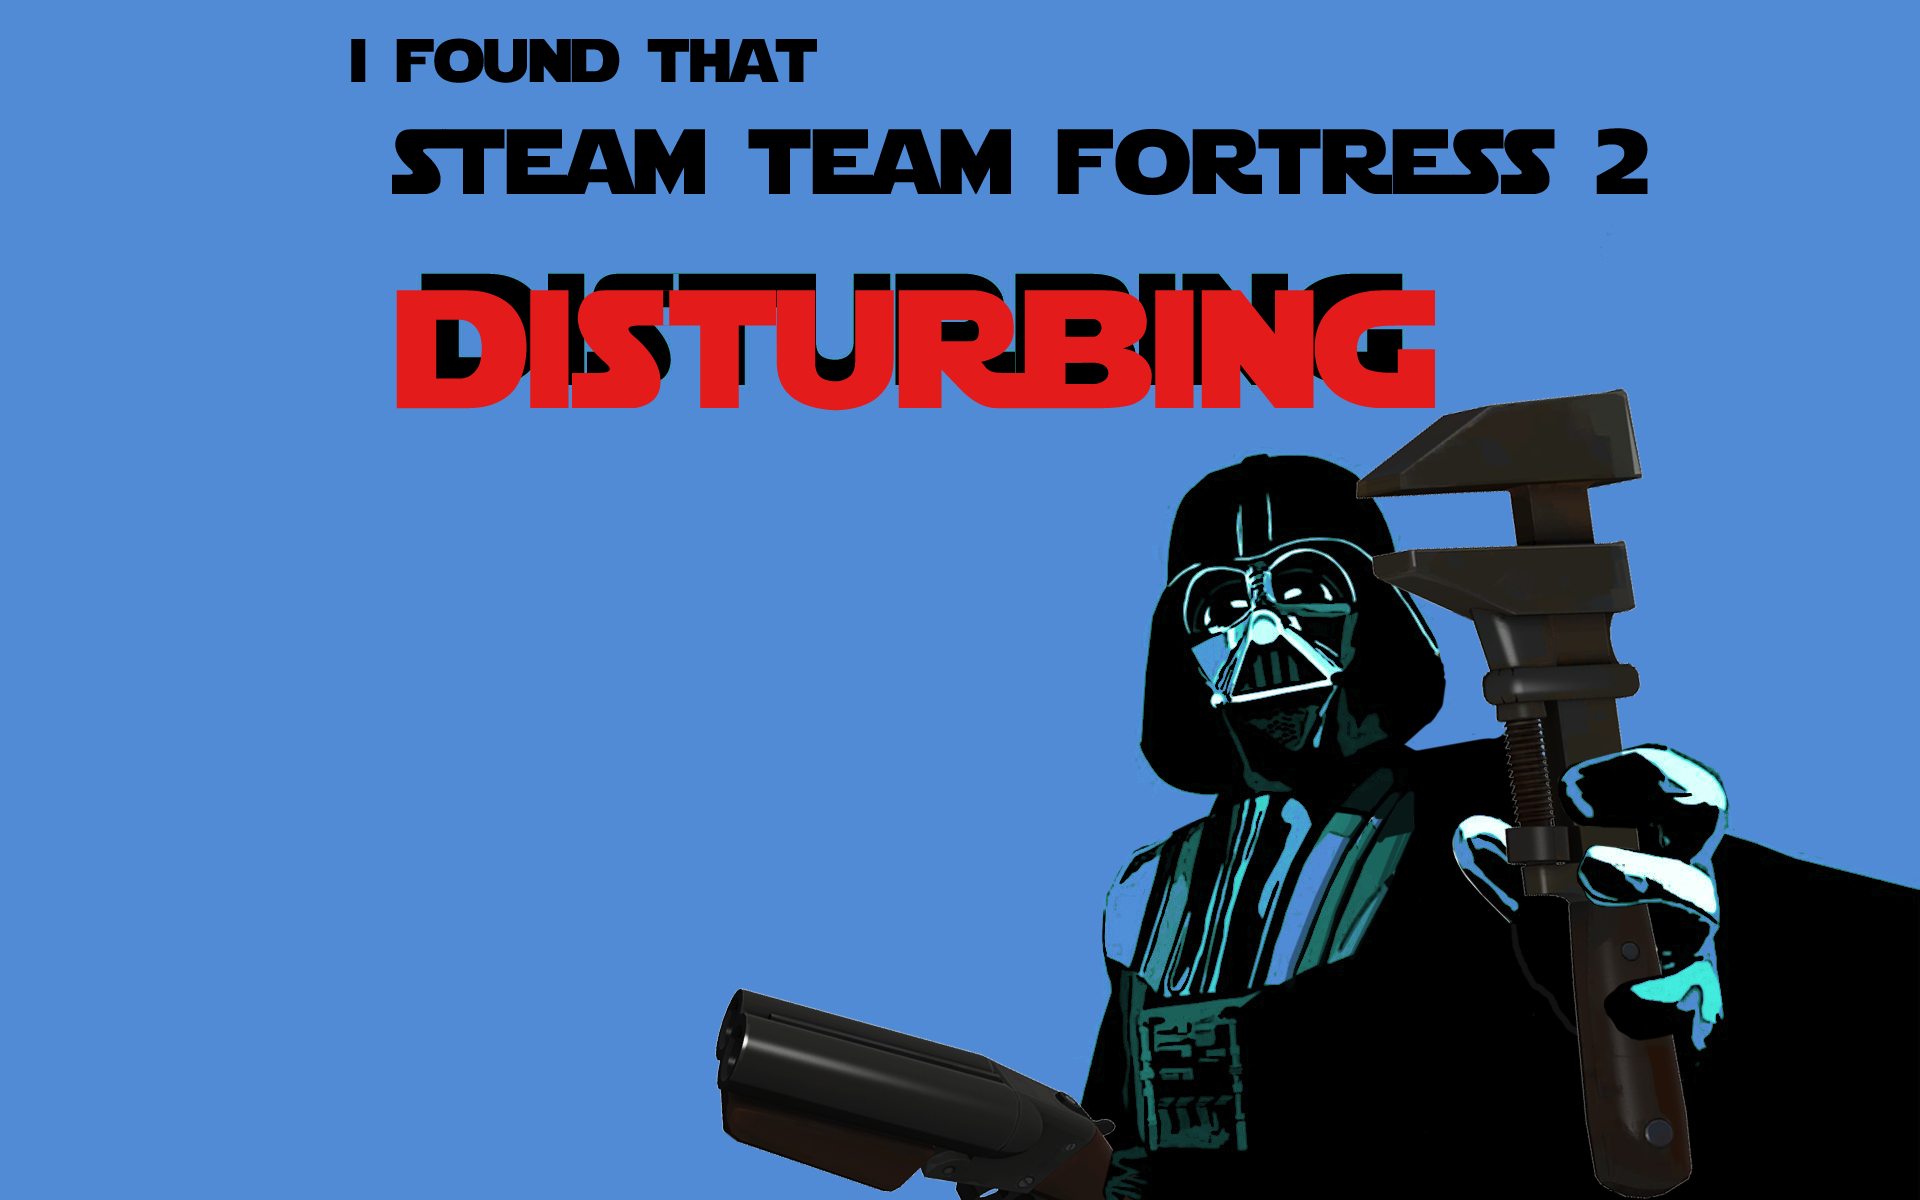 Team Fortress 2 Steam Software Darth Vader Humor Advertisements Pyro Character Star Wars 1920x1200